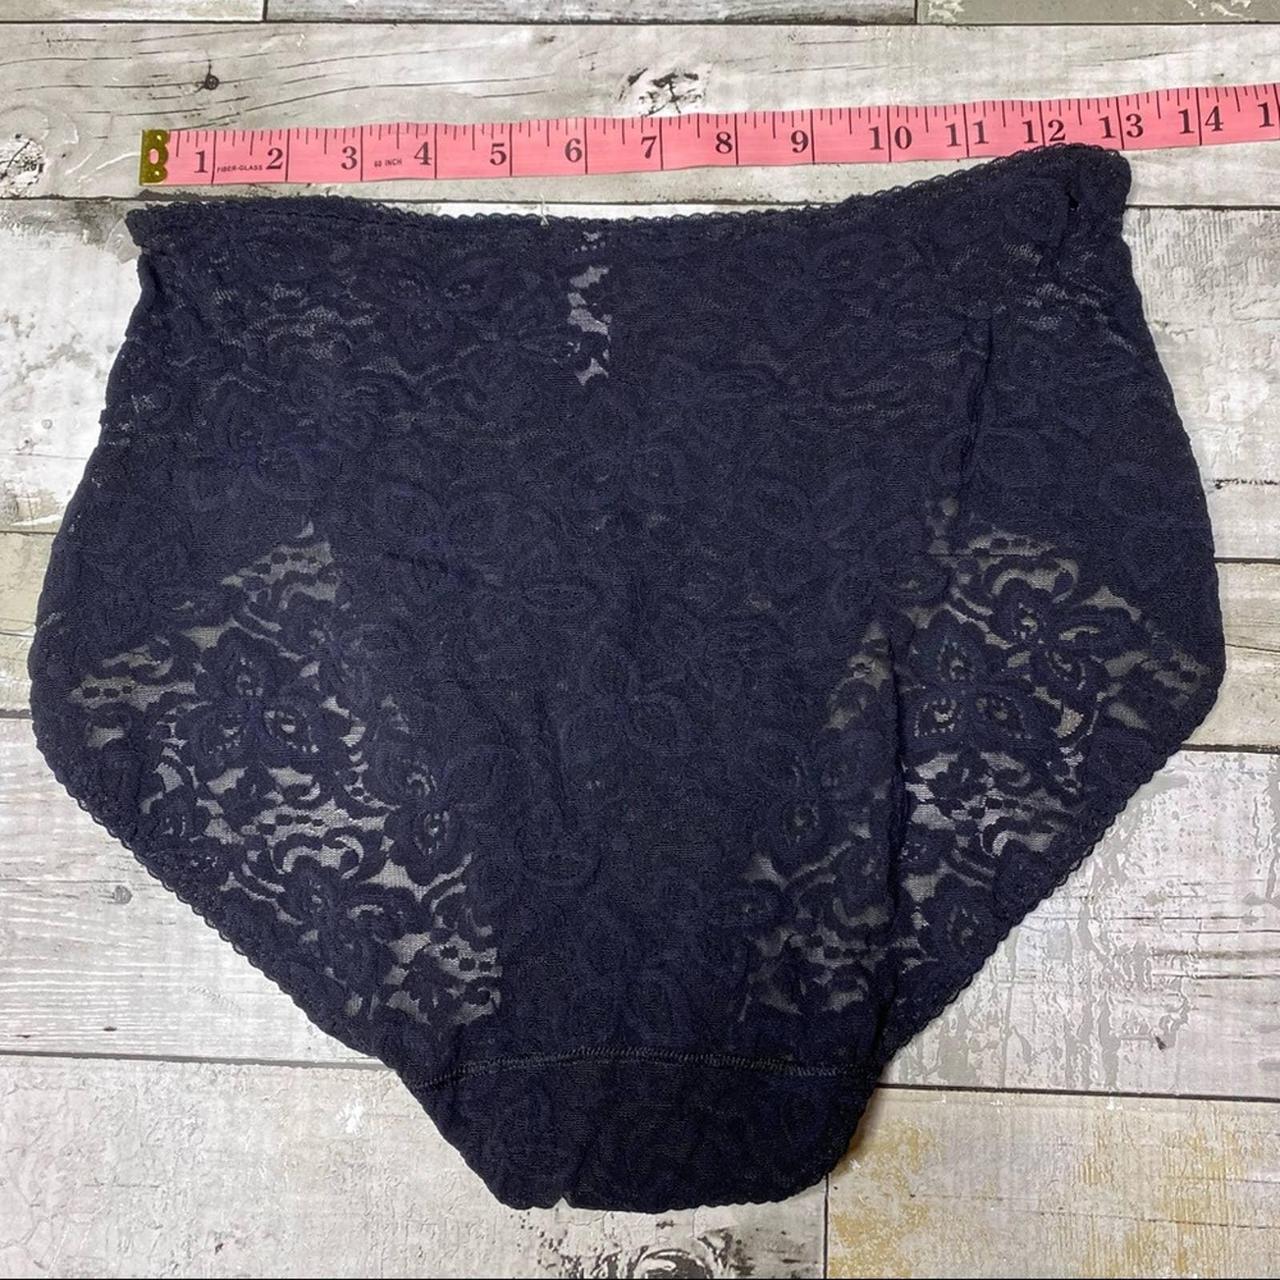 Vintage lace high cut brief panties Size... - Depop